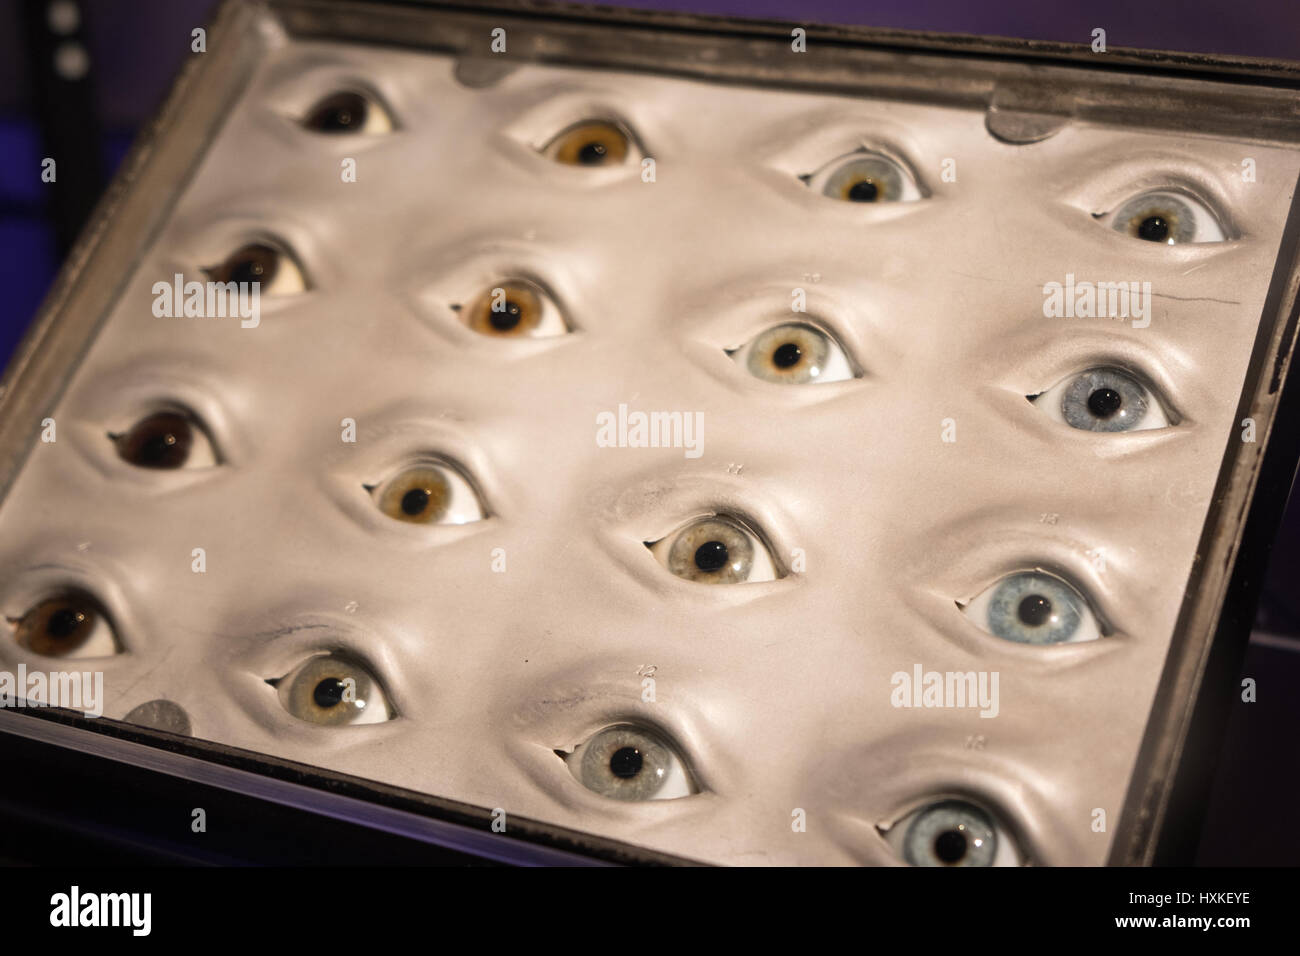 Display of glass eyes. Stock Photo